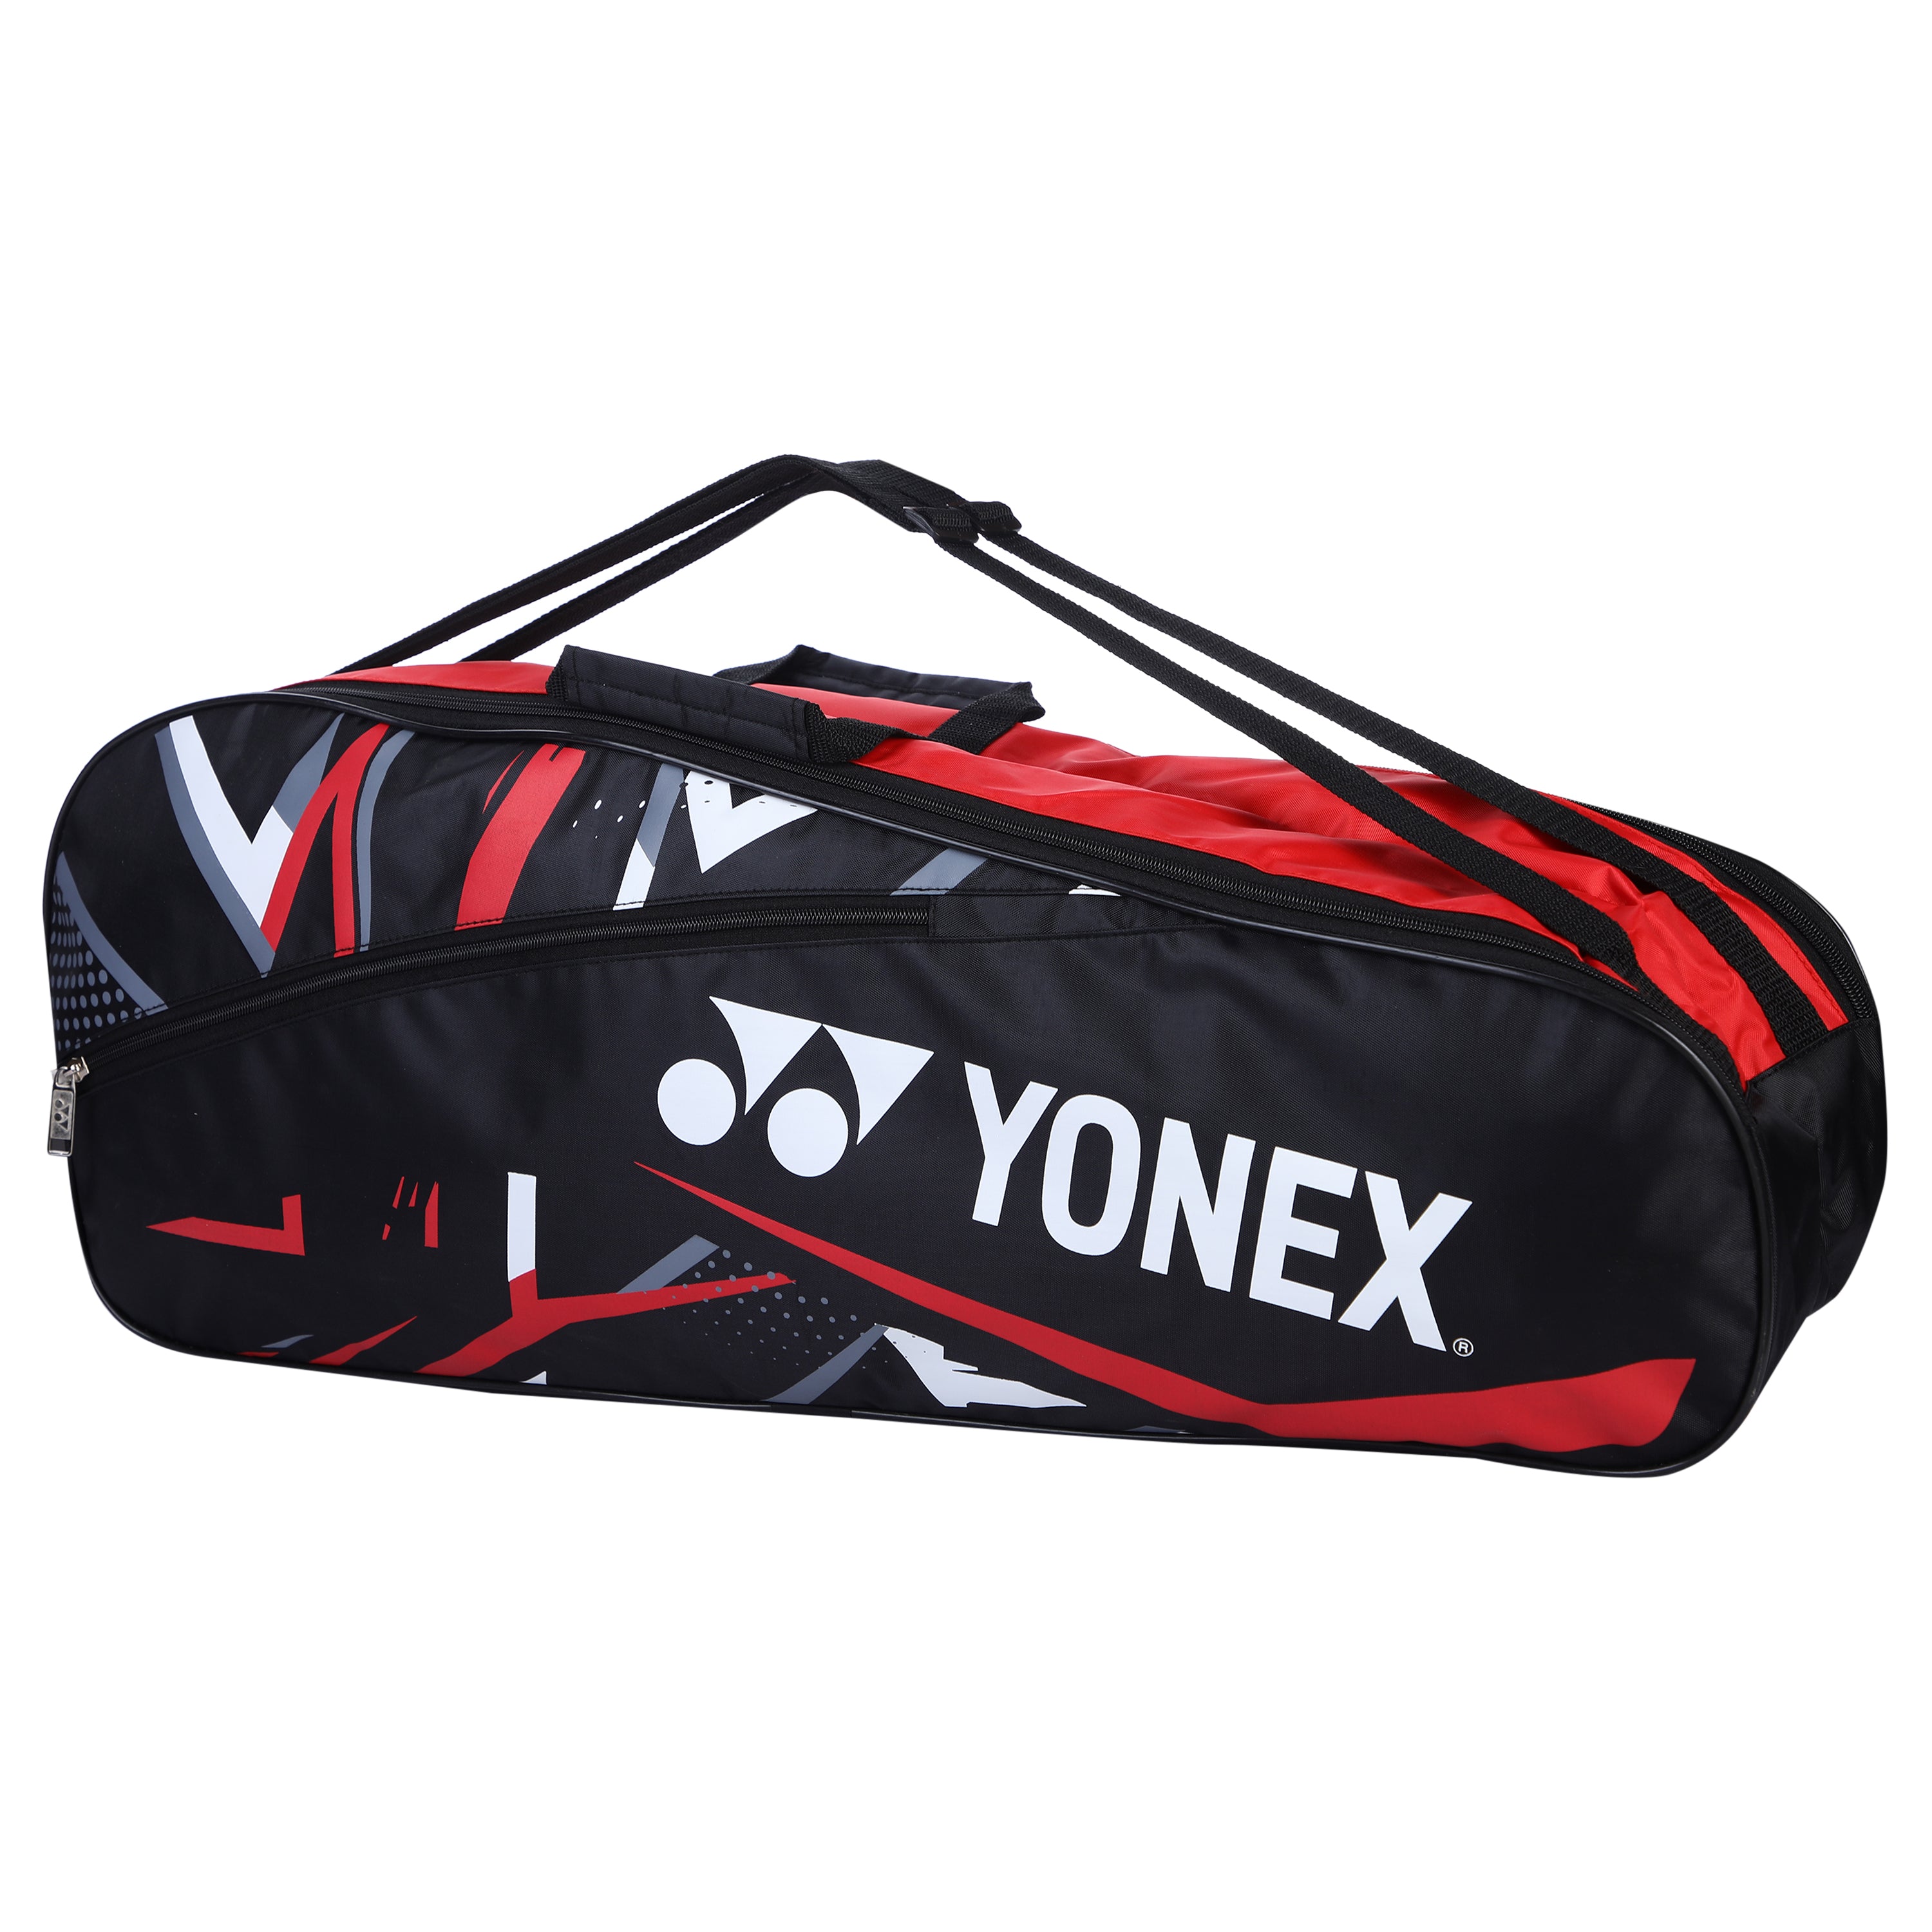 Yonex SUNR 2215 BT5 Badminton Kitbag Black Red